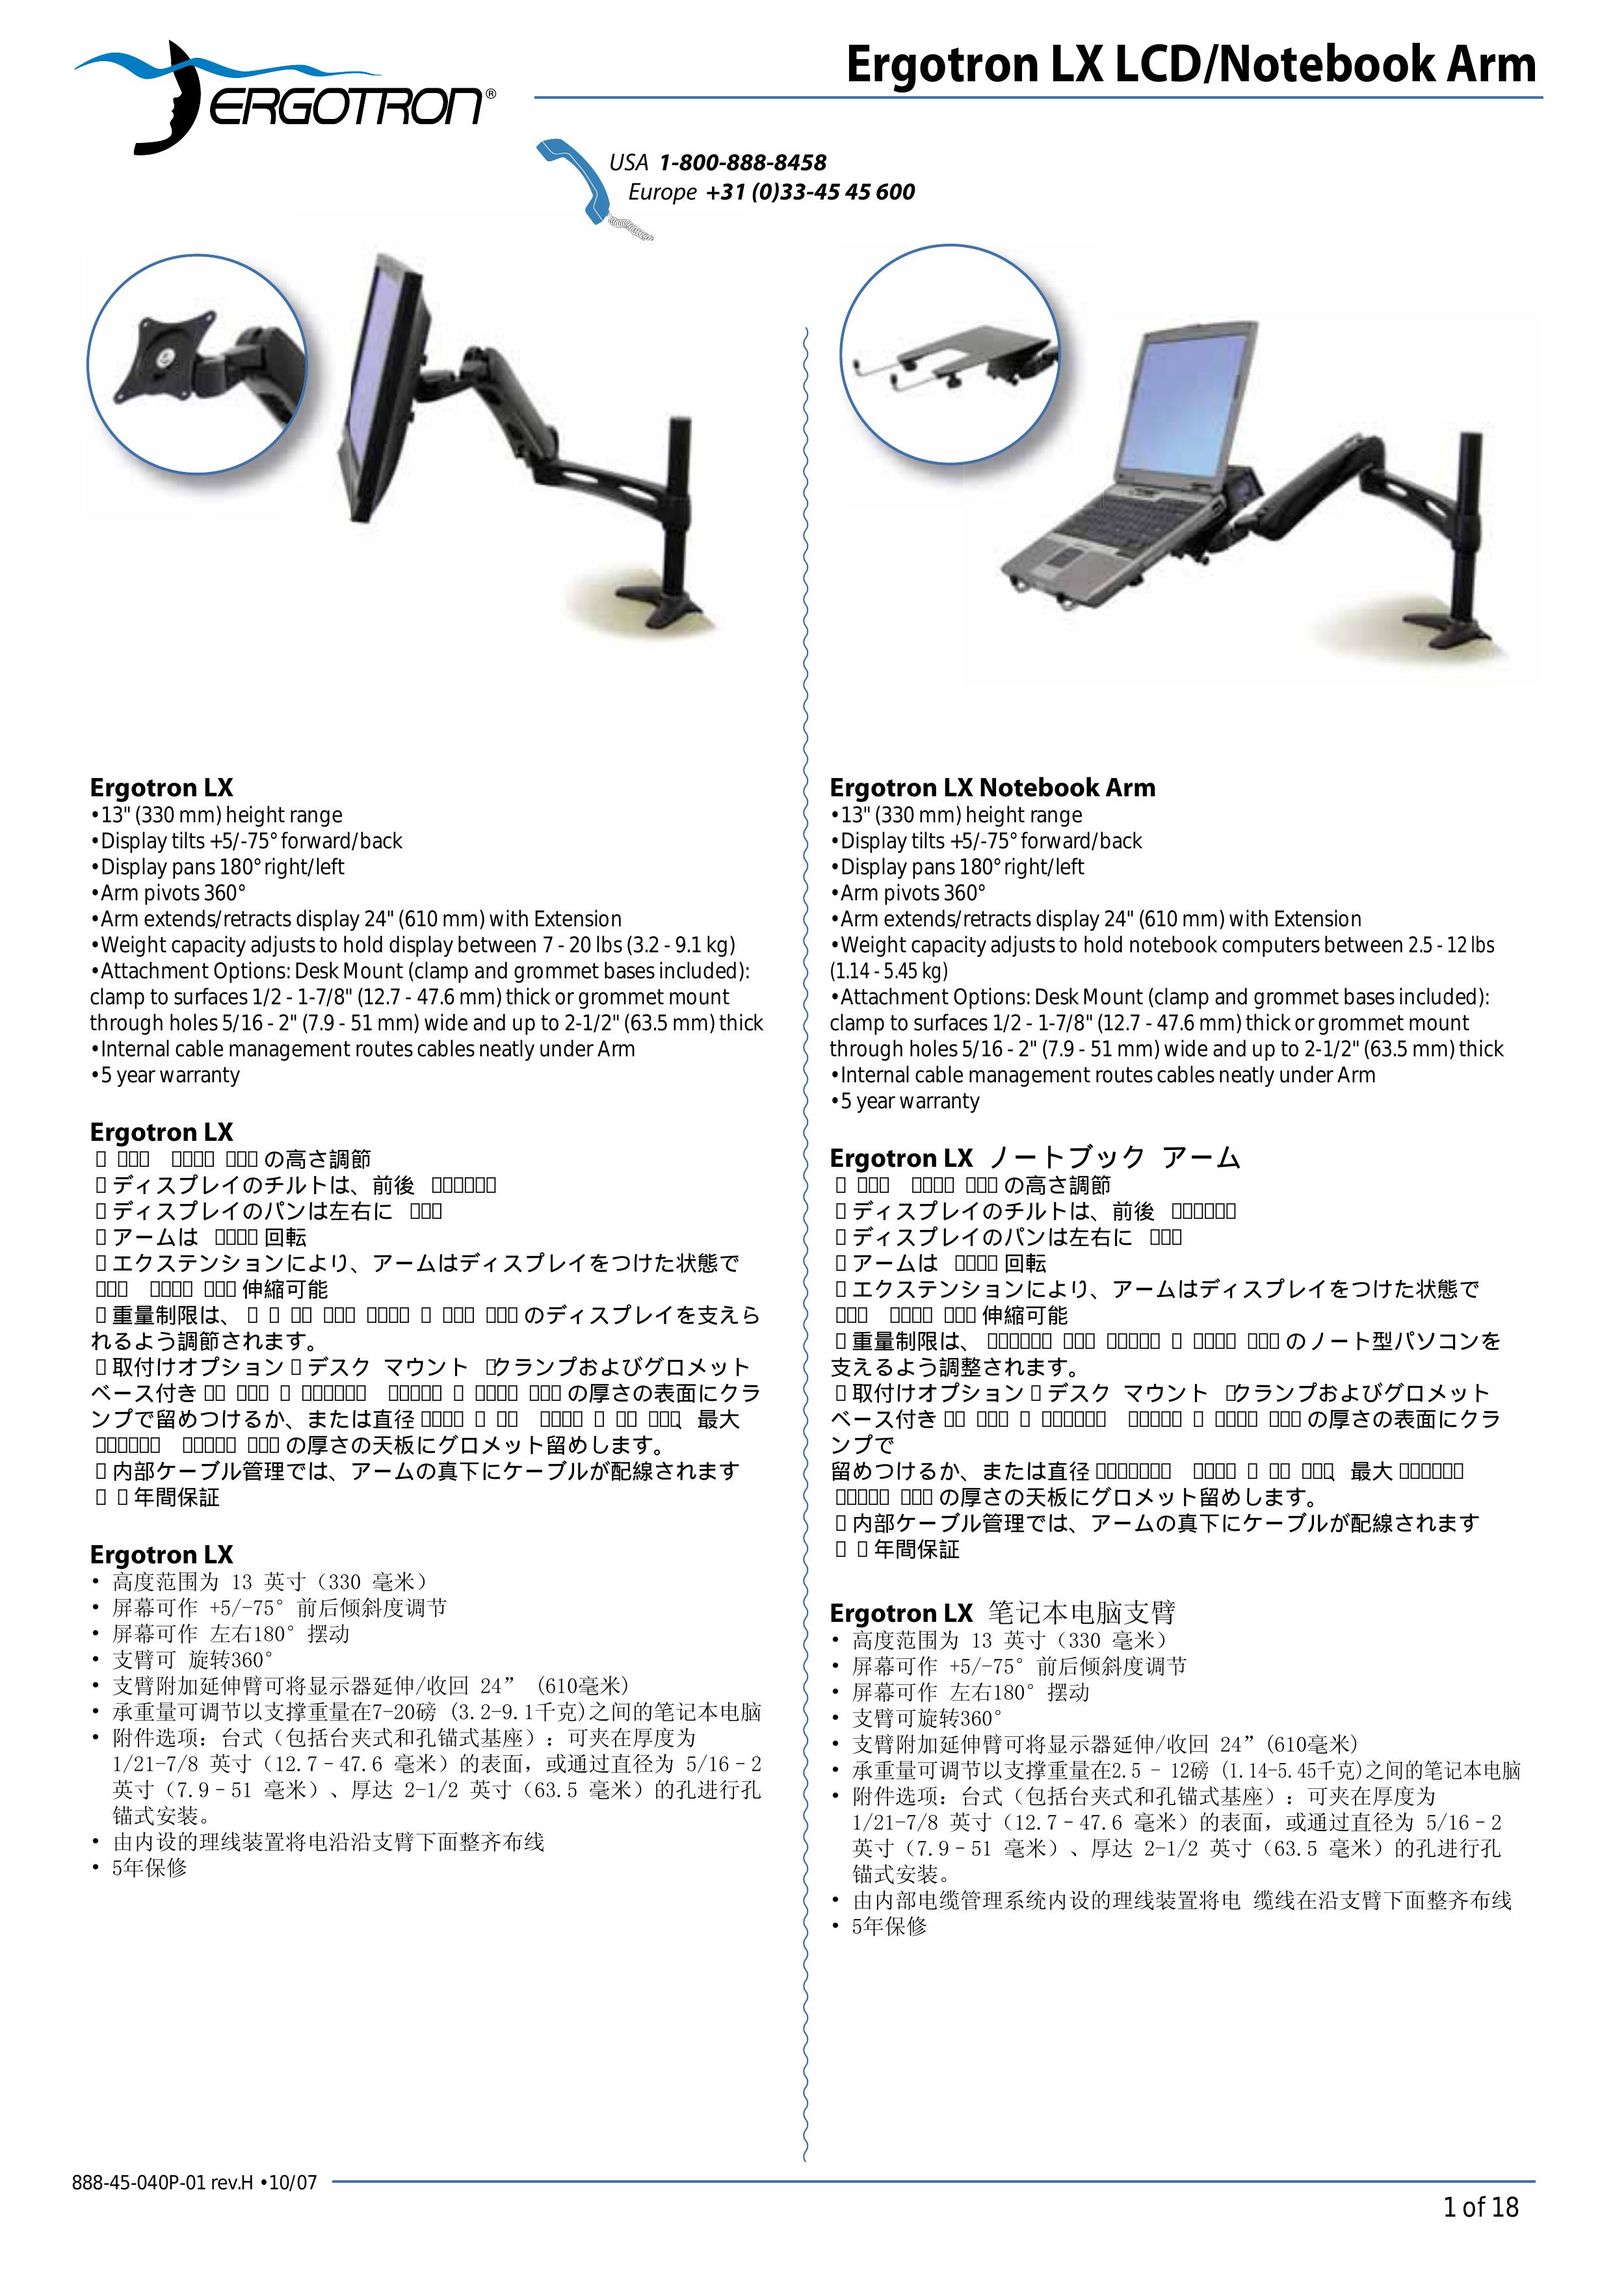 Ergotron LCD/Notebook Arm Indoor Furnishings User Manual